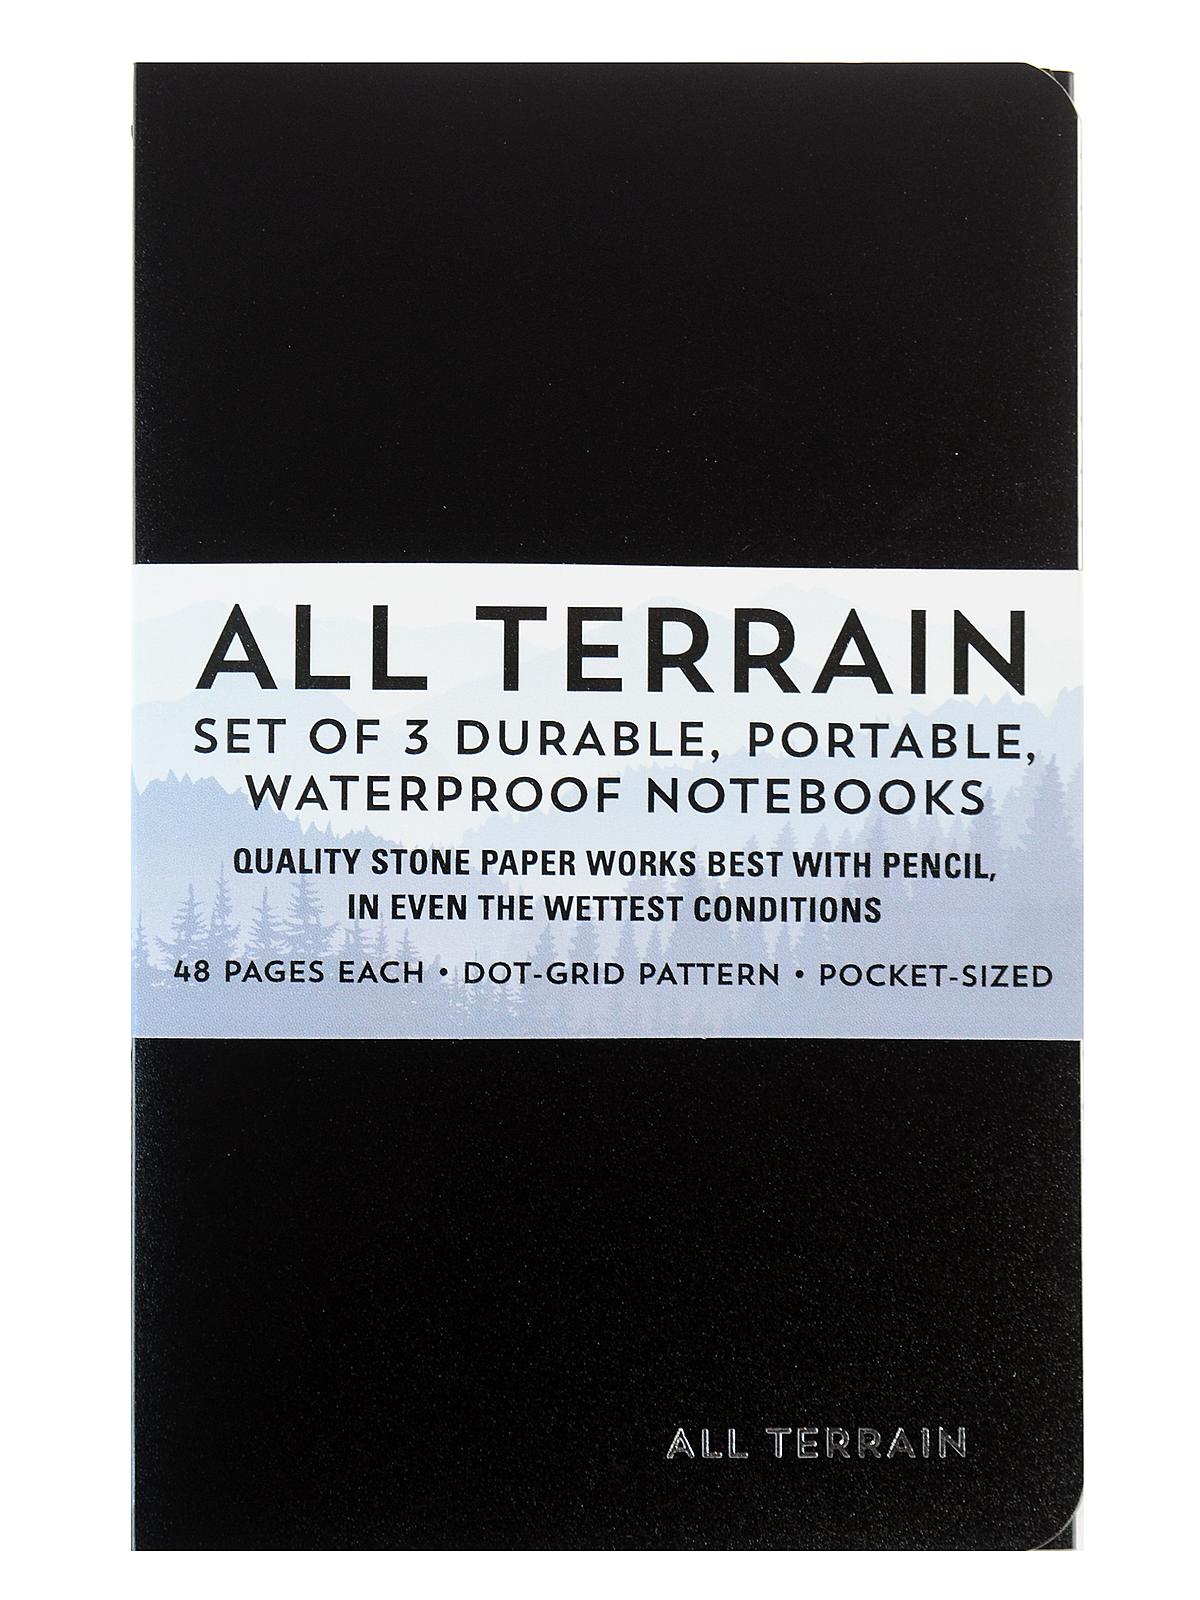 All Terrain: The Waterproof Notebook Each